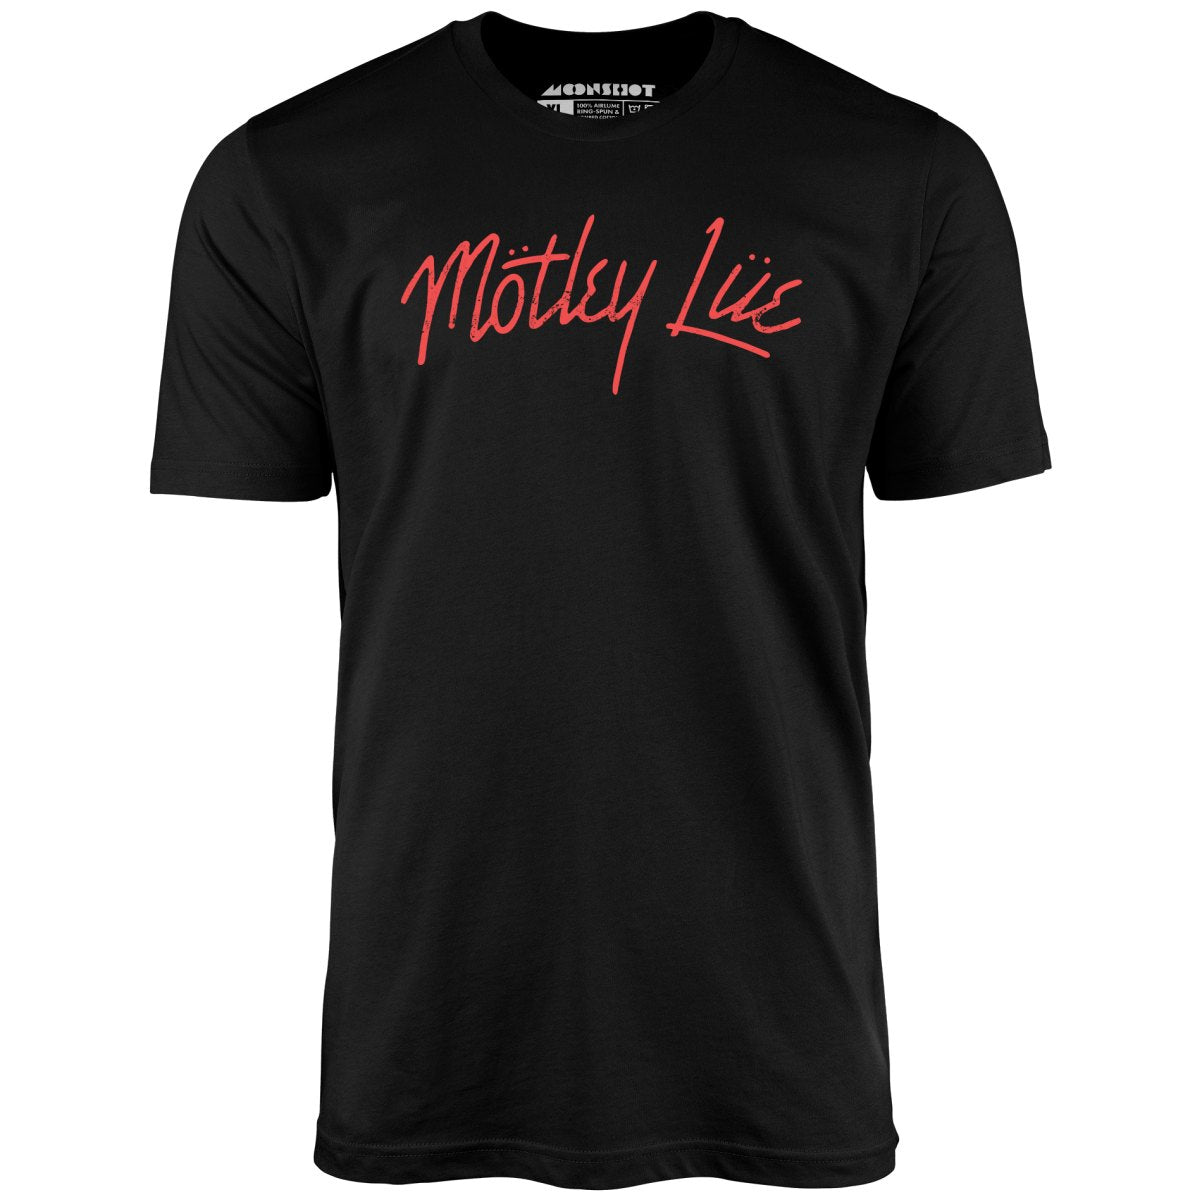 Motley Lue - Unisex T-Shirt